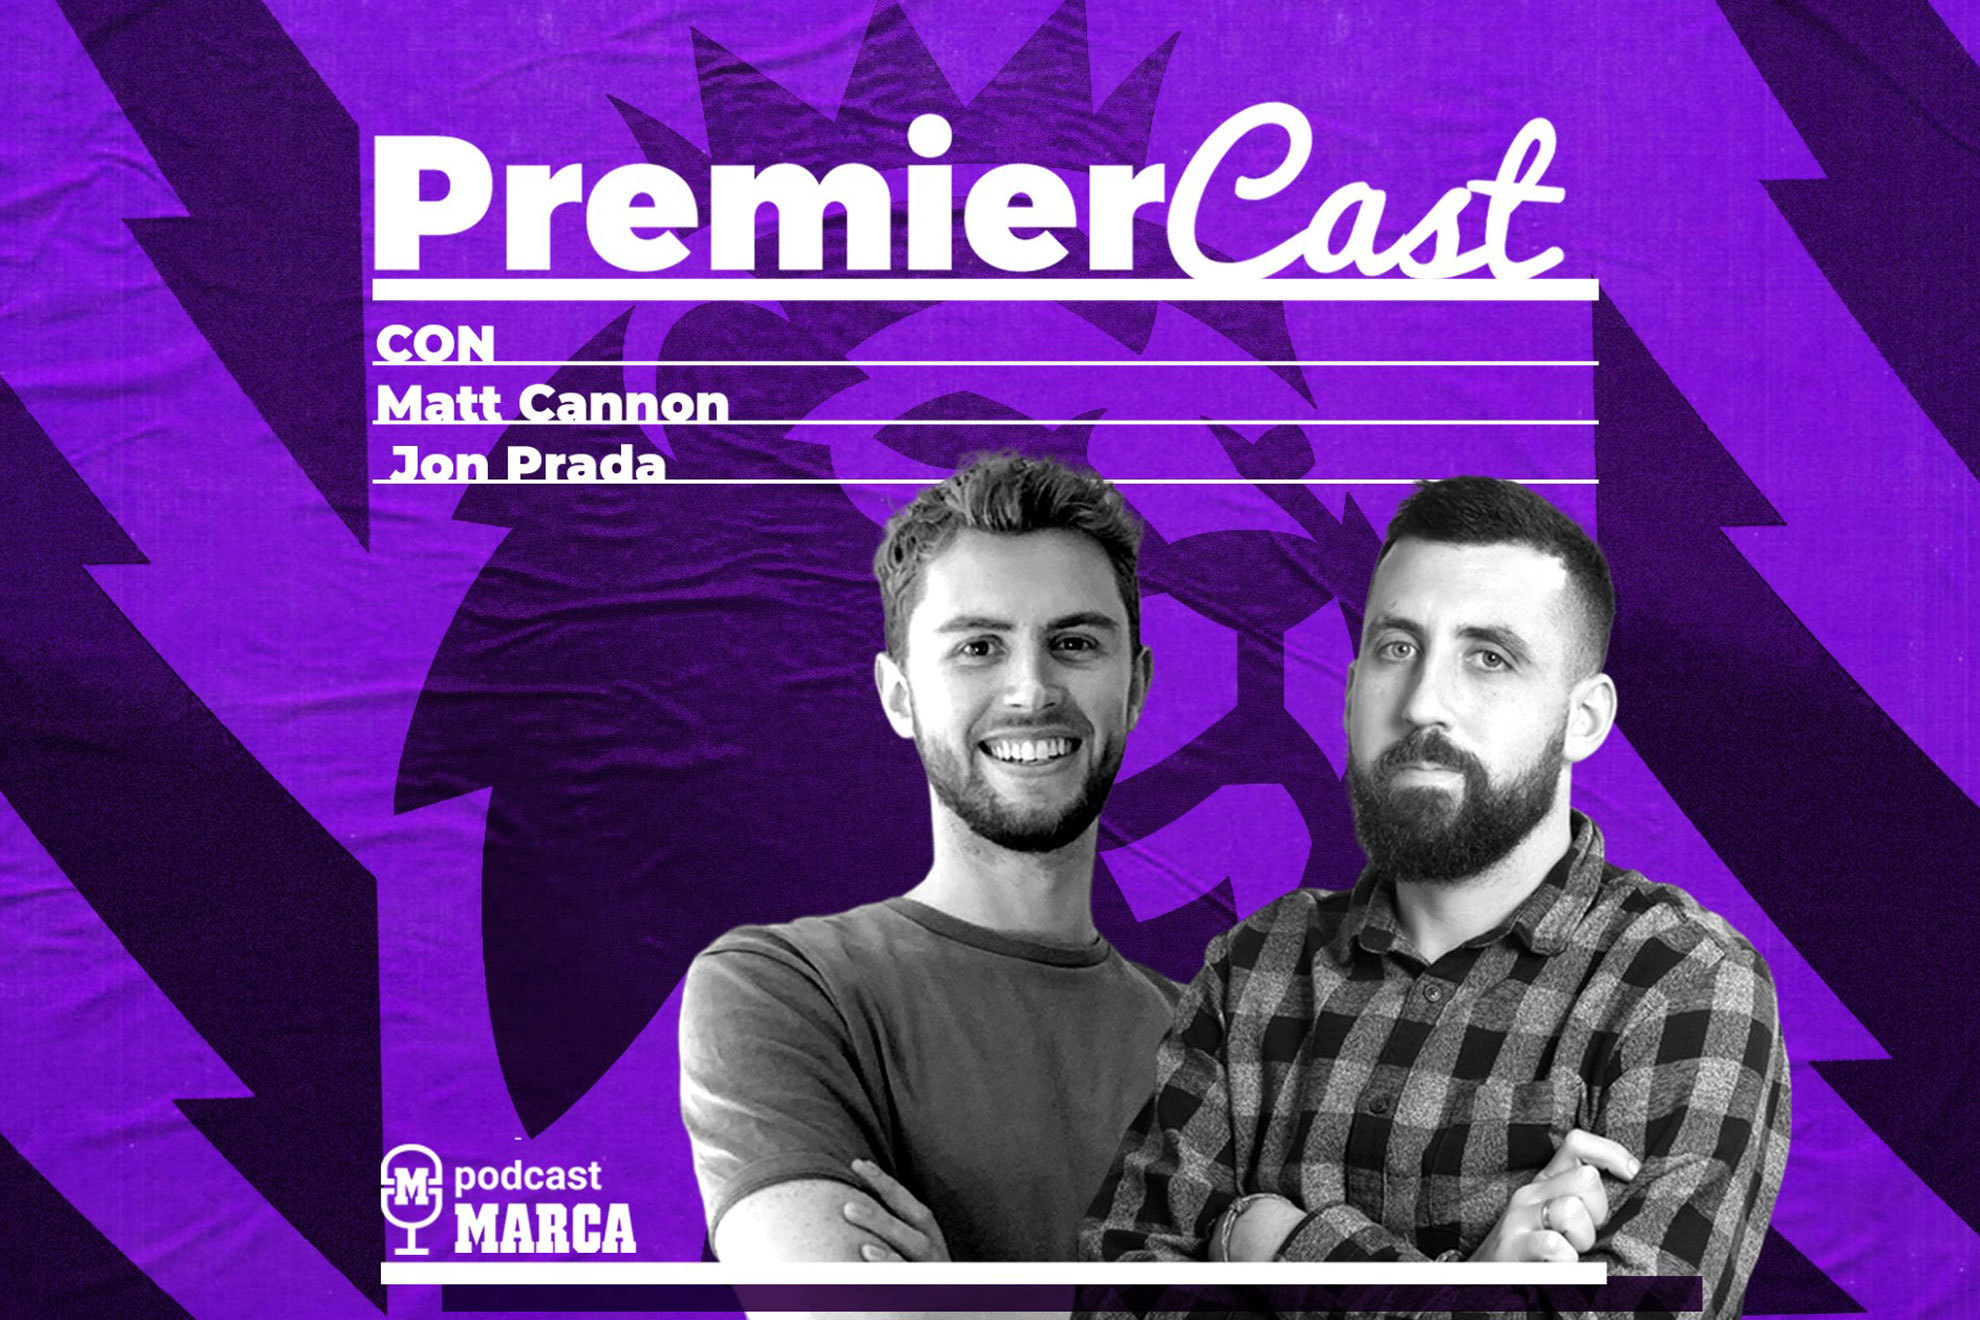 Escucha ya La porra de la Premier ms loca, el tercer episodio de PremierCast, tu Podcast MARCA de la Premier